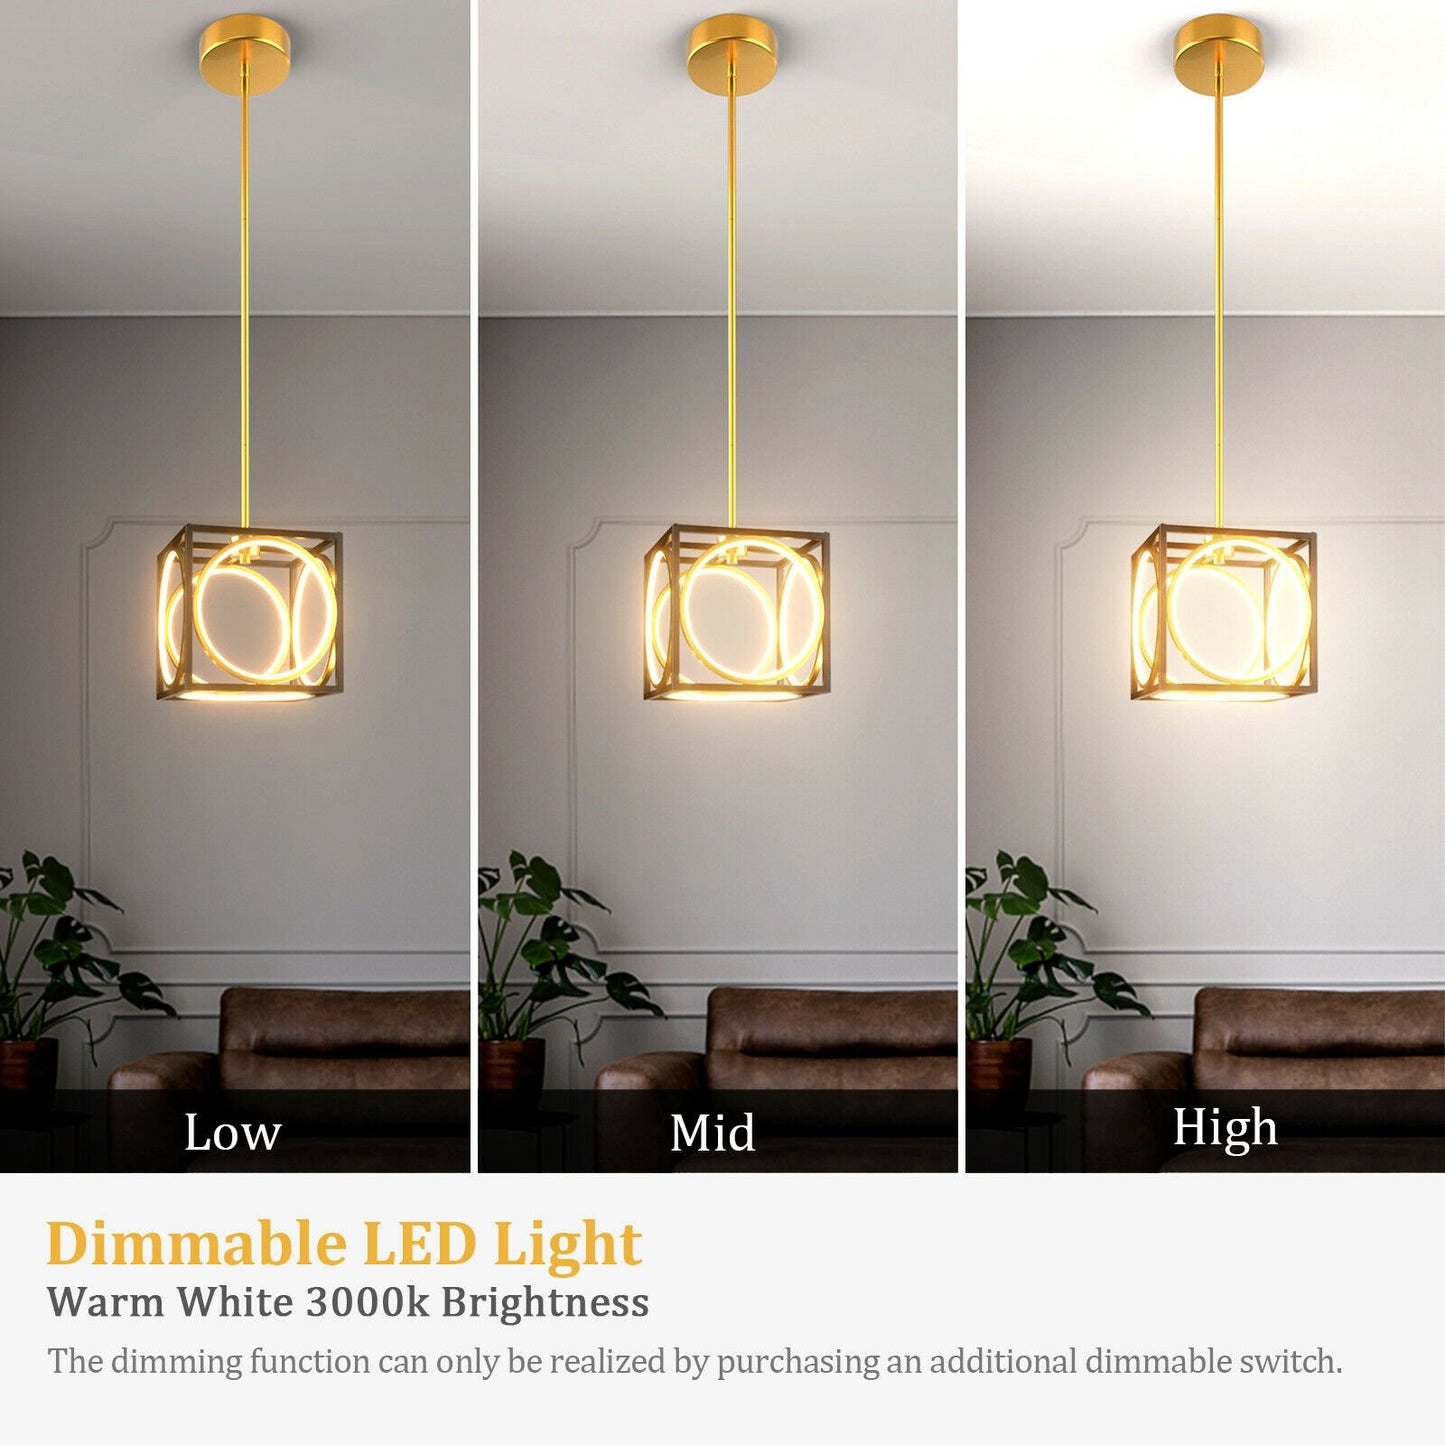 Modern LED Pendant Light with 42 Inches Adjustable Suspender, Golden